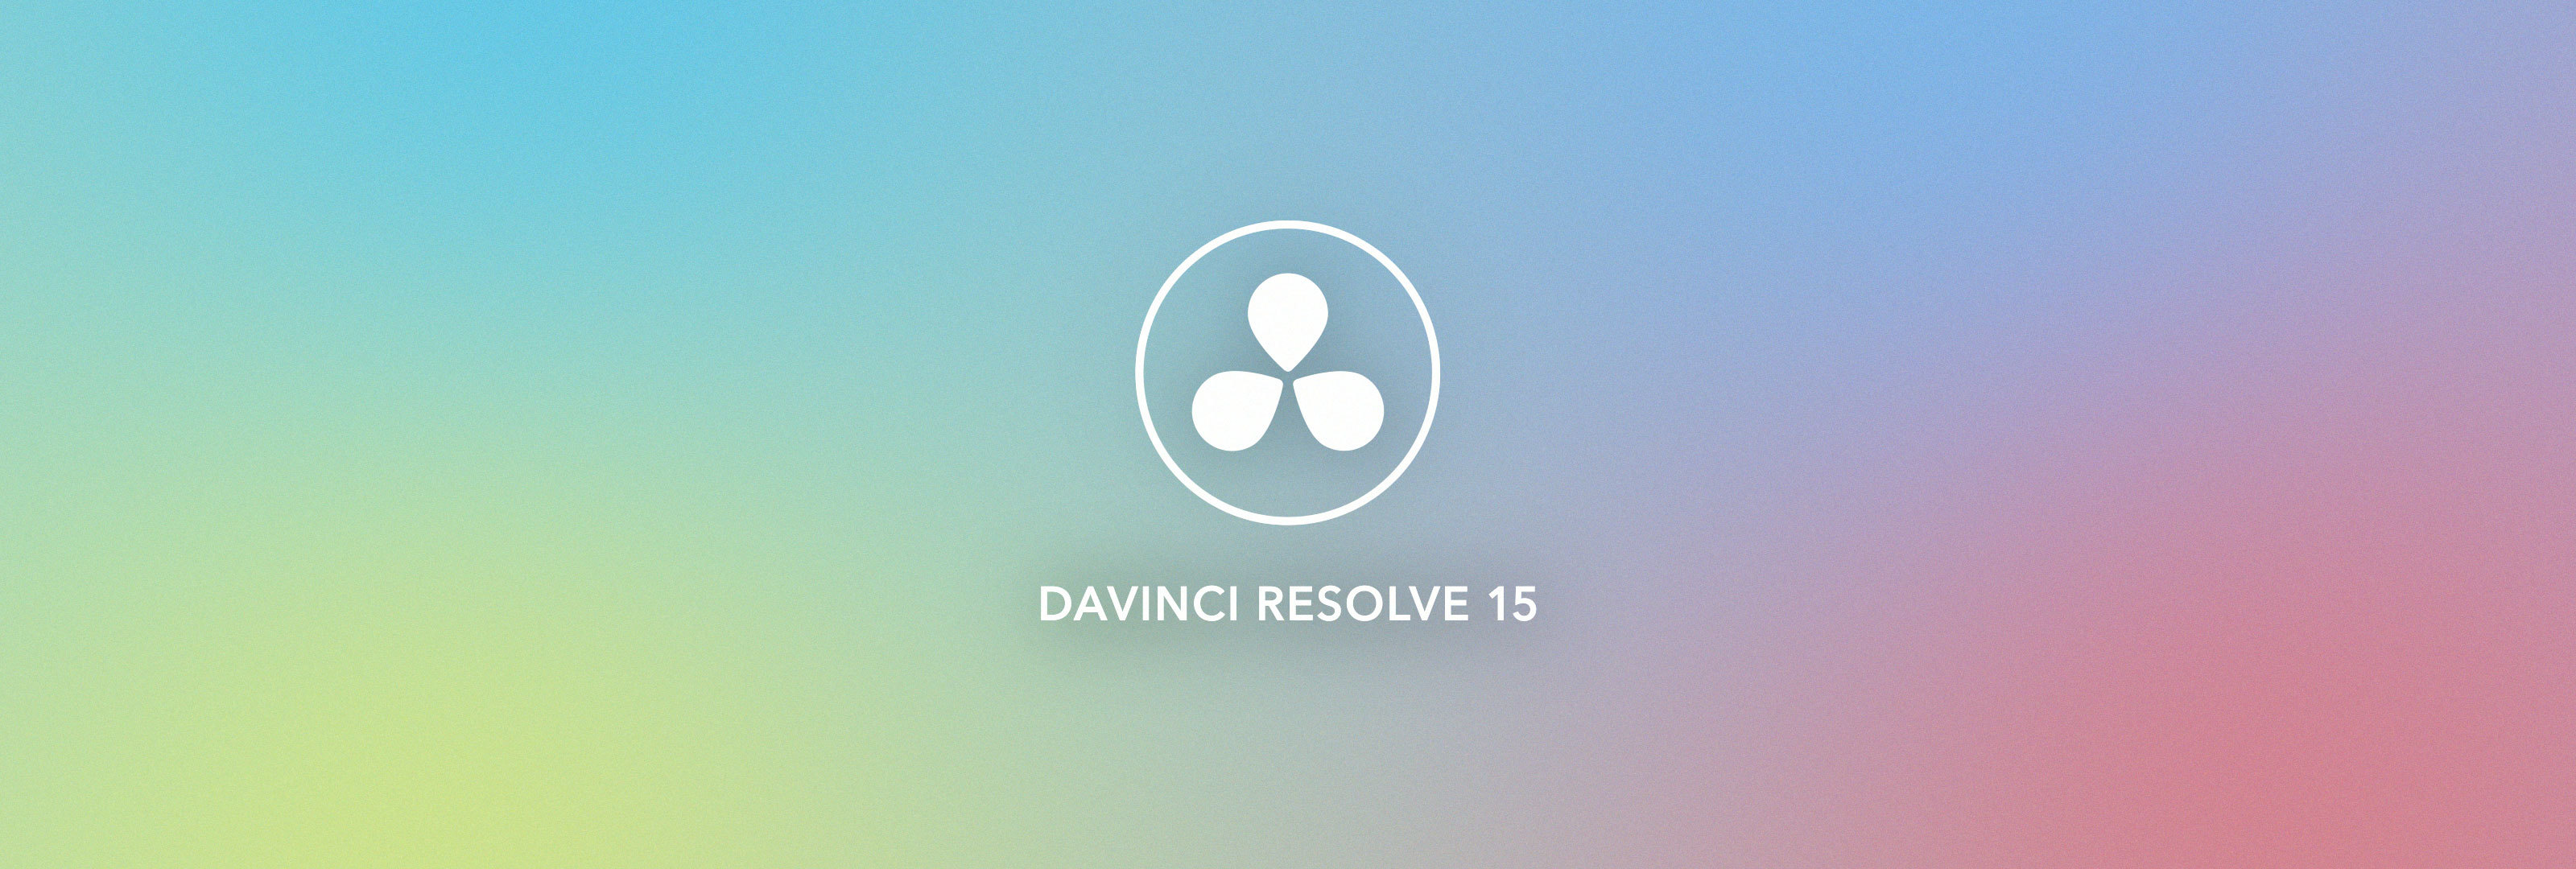 davinci resolve templates logo free